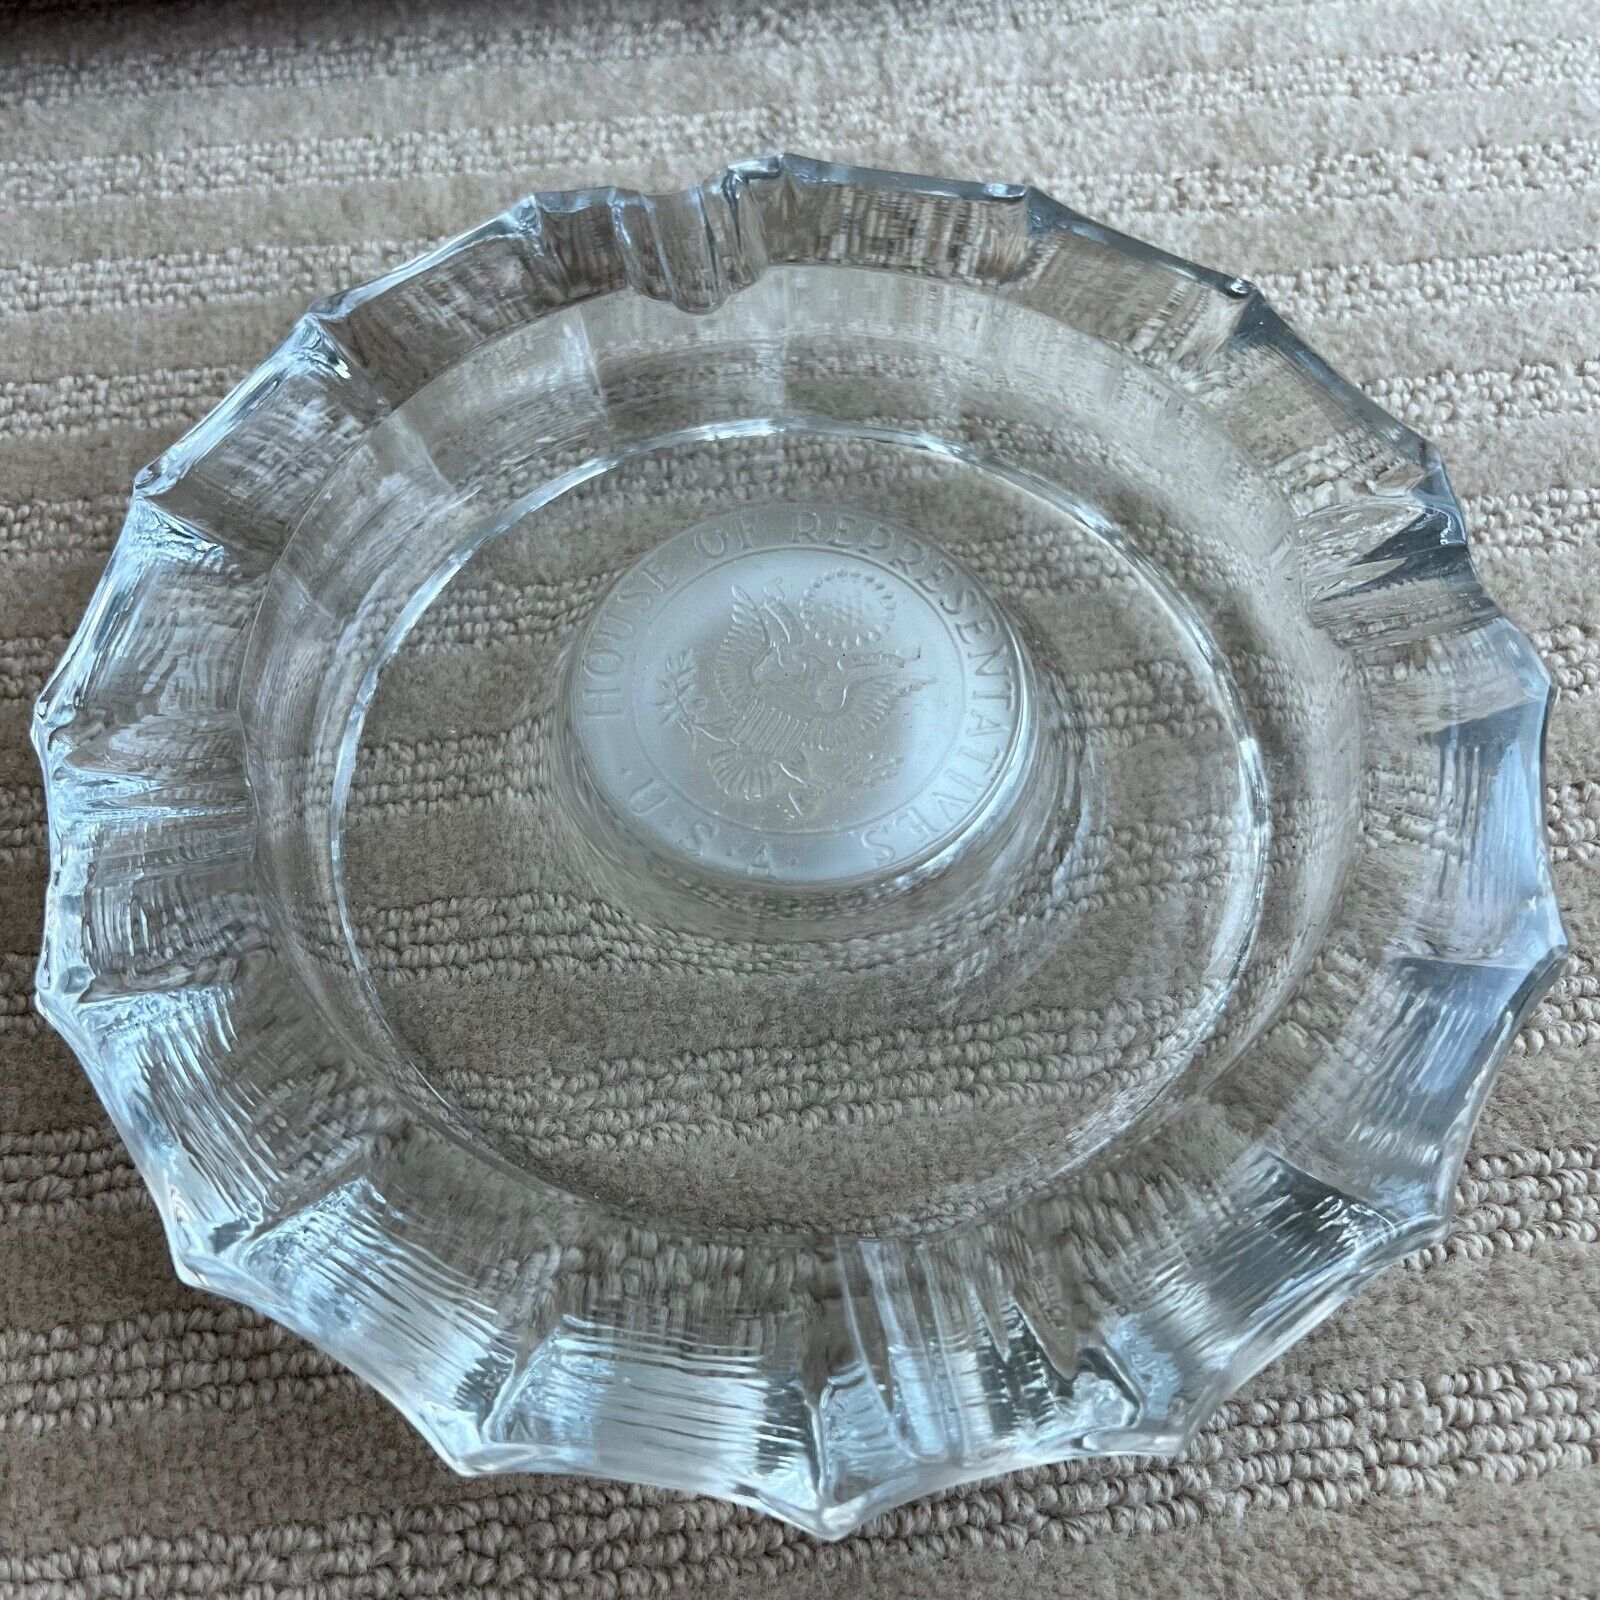 House of Representatives Official USA glass ashtray, 7.5" round, vintage Без бренда - фотография #3